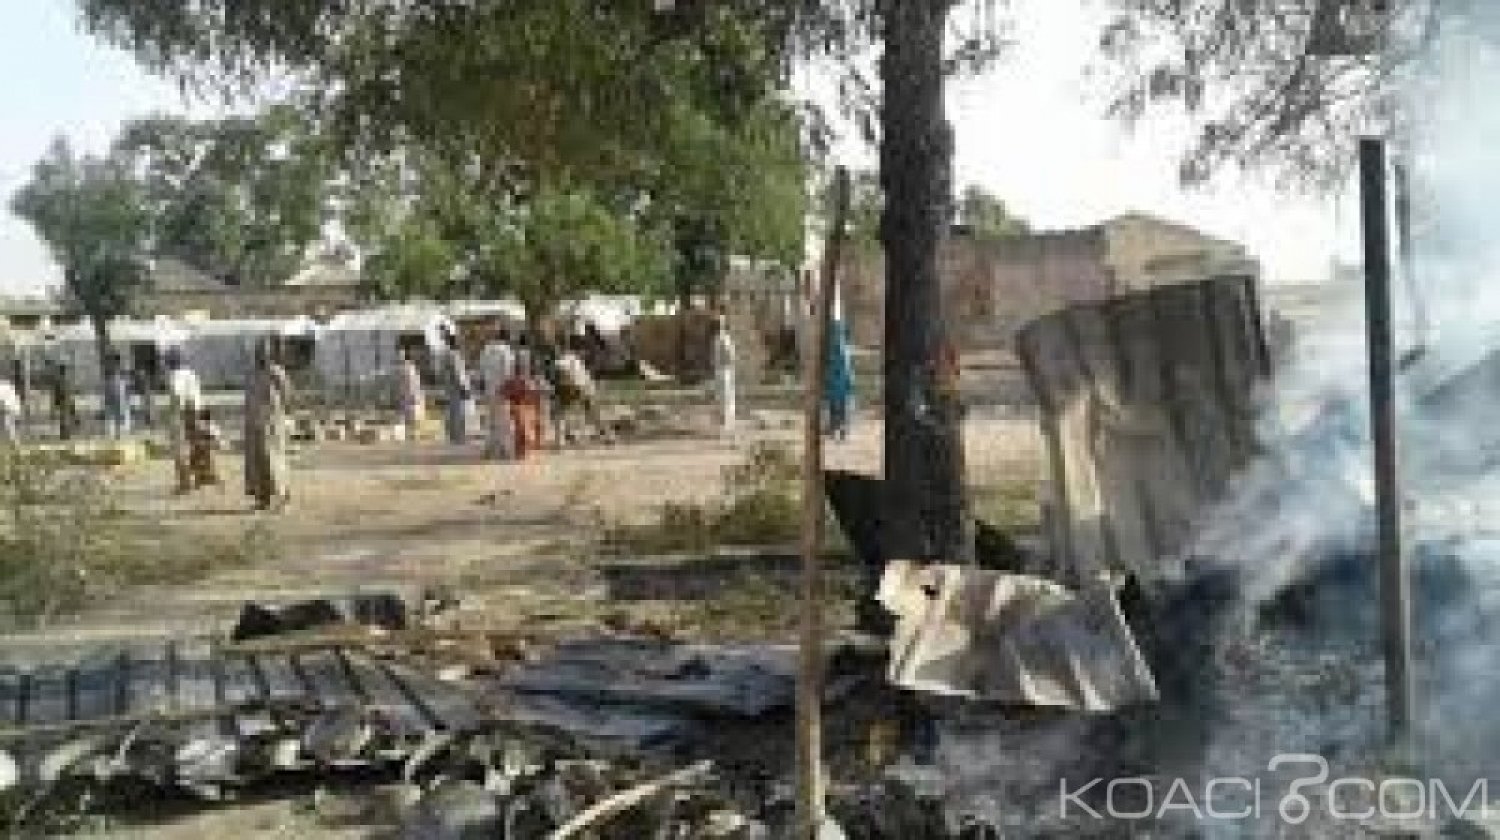 Nigeria: Au moins 30 villageois abattus par Boko Haram dans l'Etat d'Adamawa